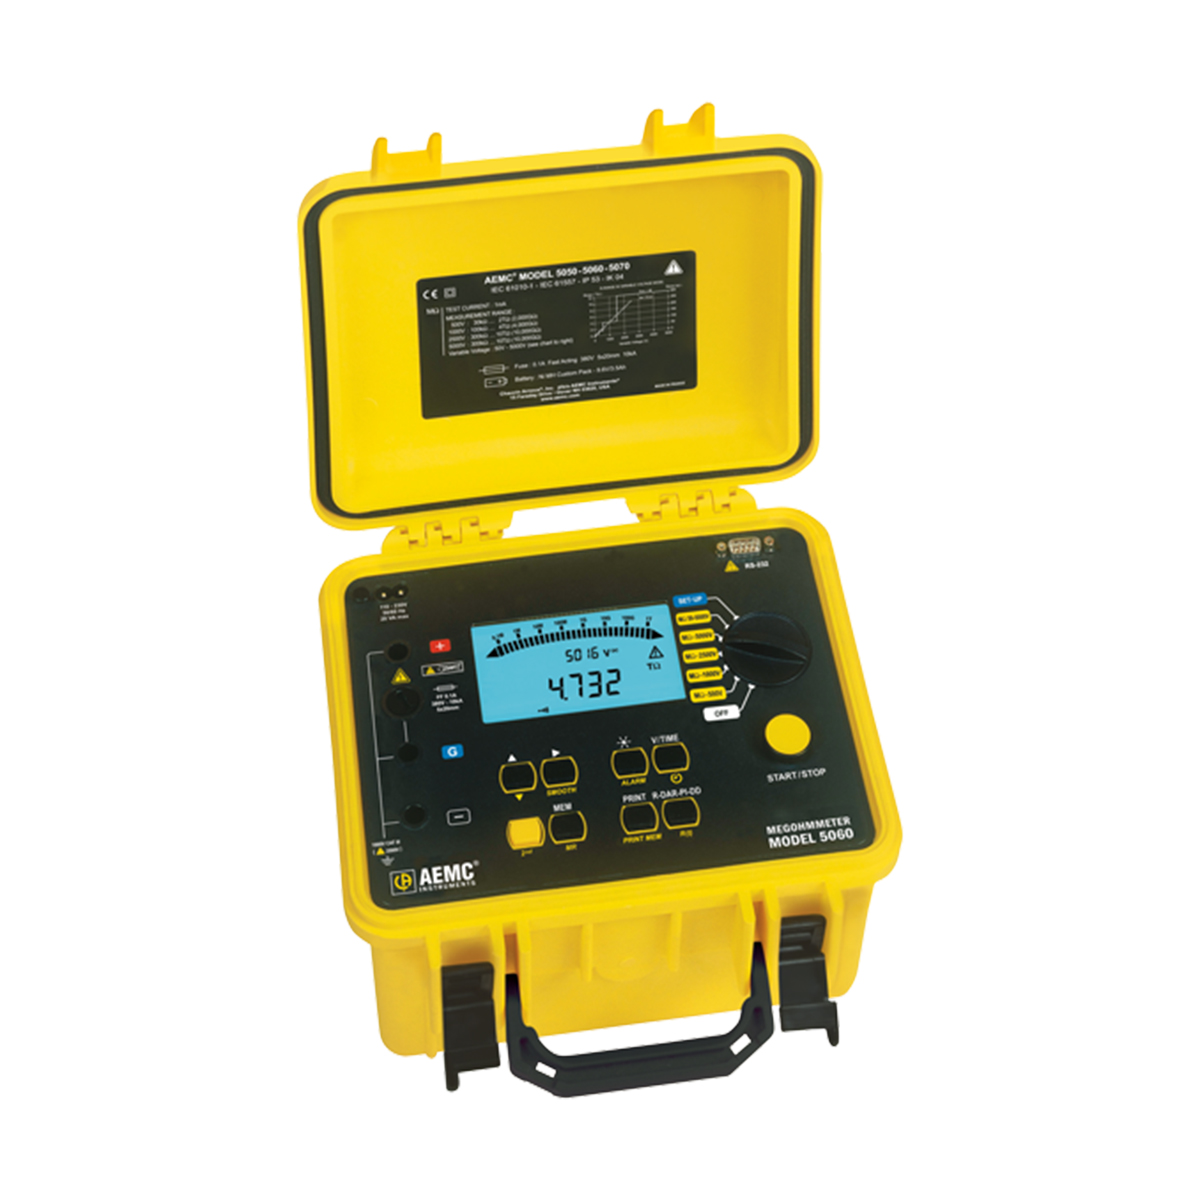 AEMC 2130.21 Megohmmeter Model 5060 (Digital, Analog Bargraph, Backlight, Alarm, Timer, 500V, 1000V, 2500V, 5000V